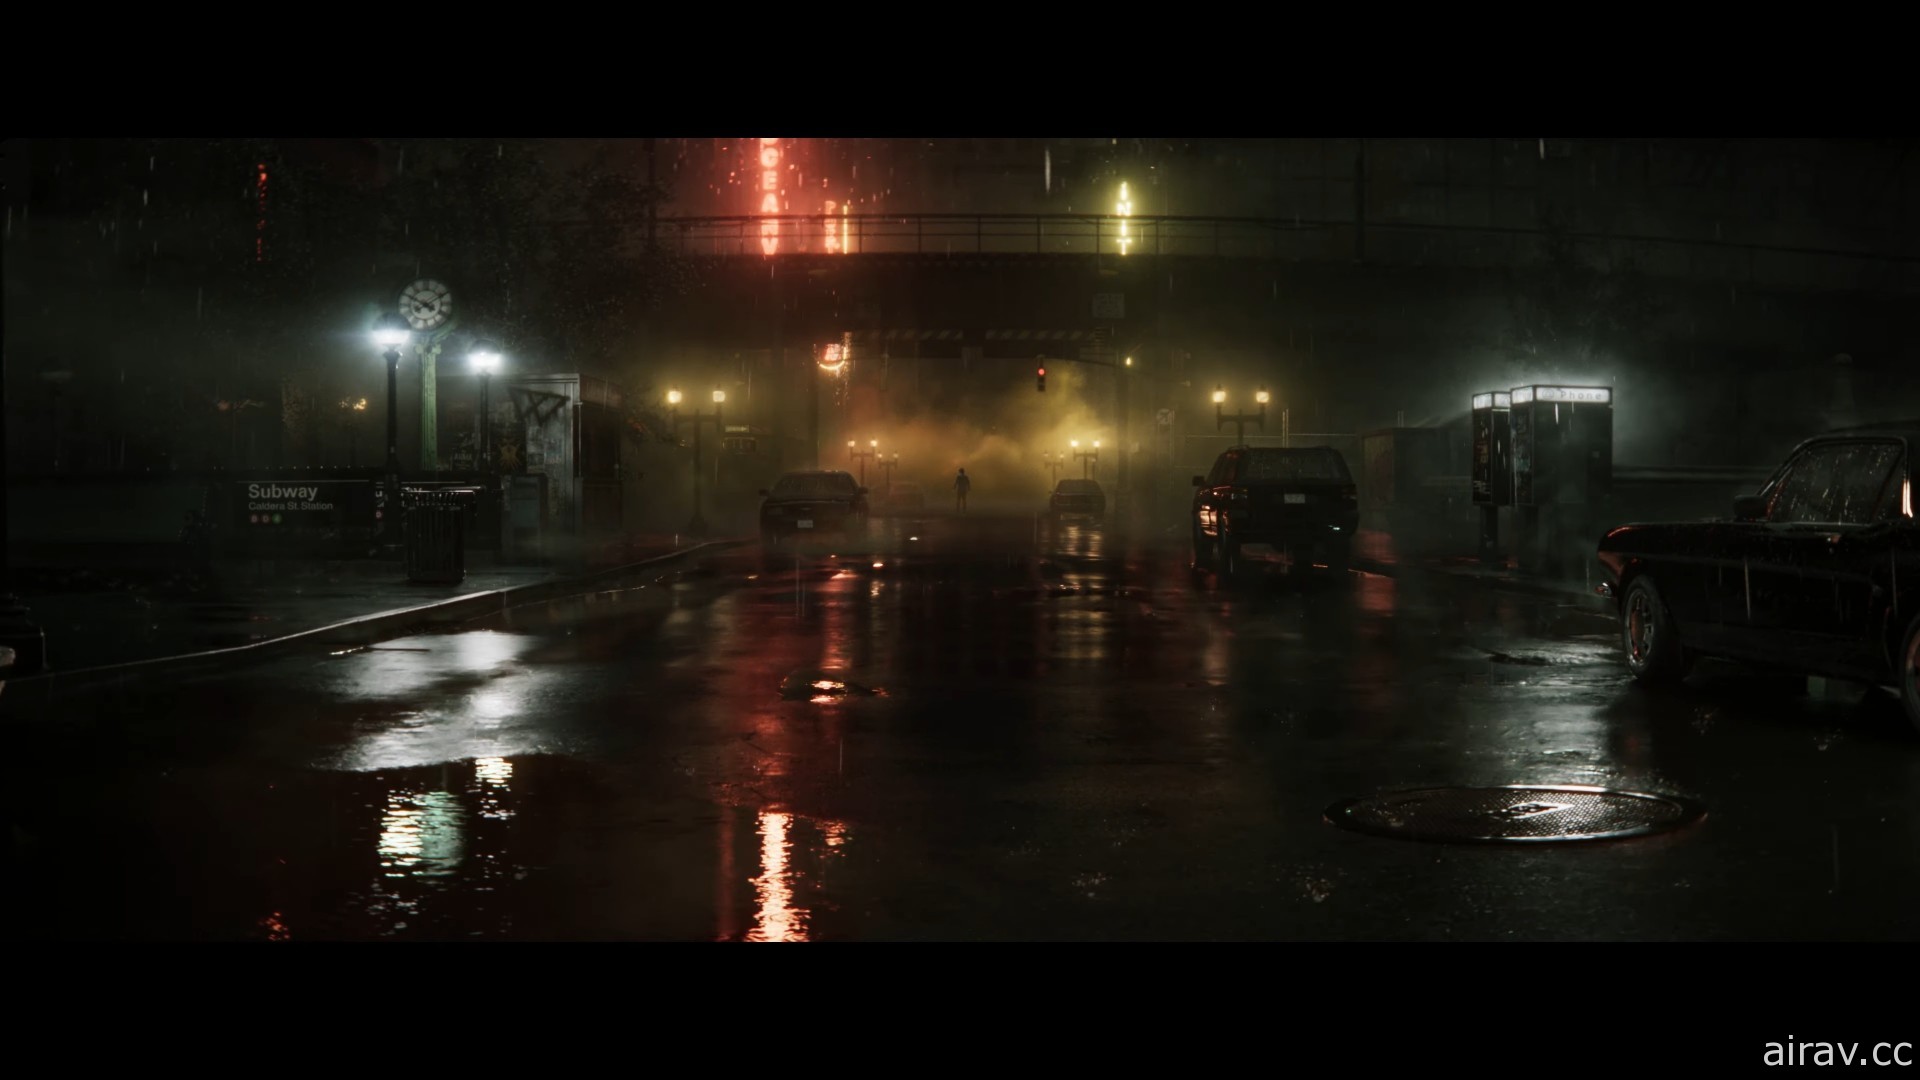 【TGA 21】《心靈殺手》續作《心靈殺手 2》預計 2023 年推出 釋出預告影片